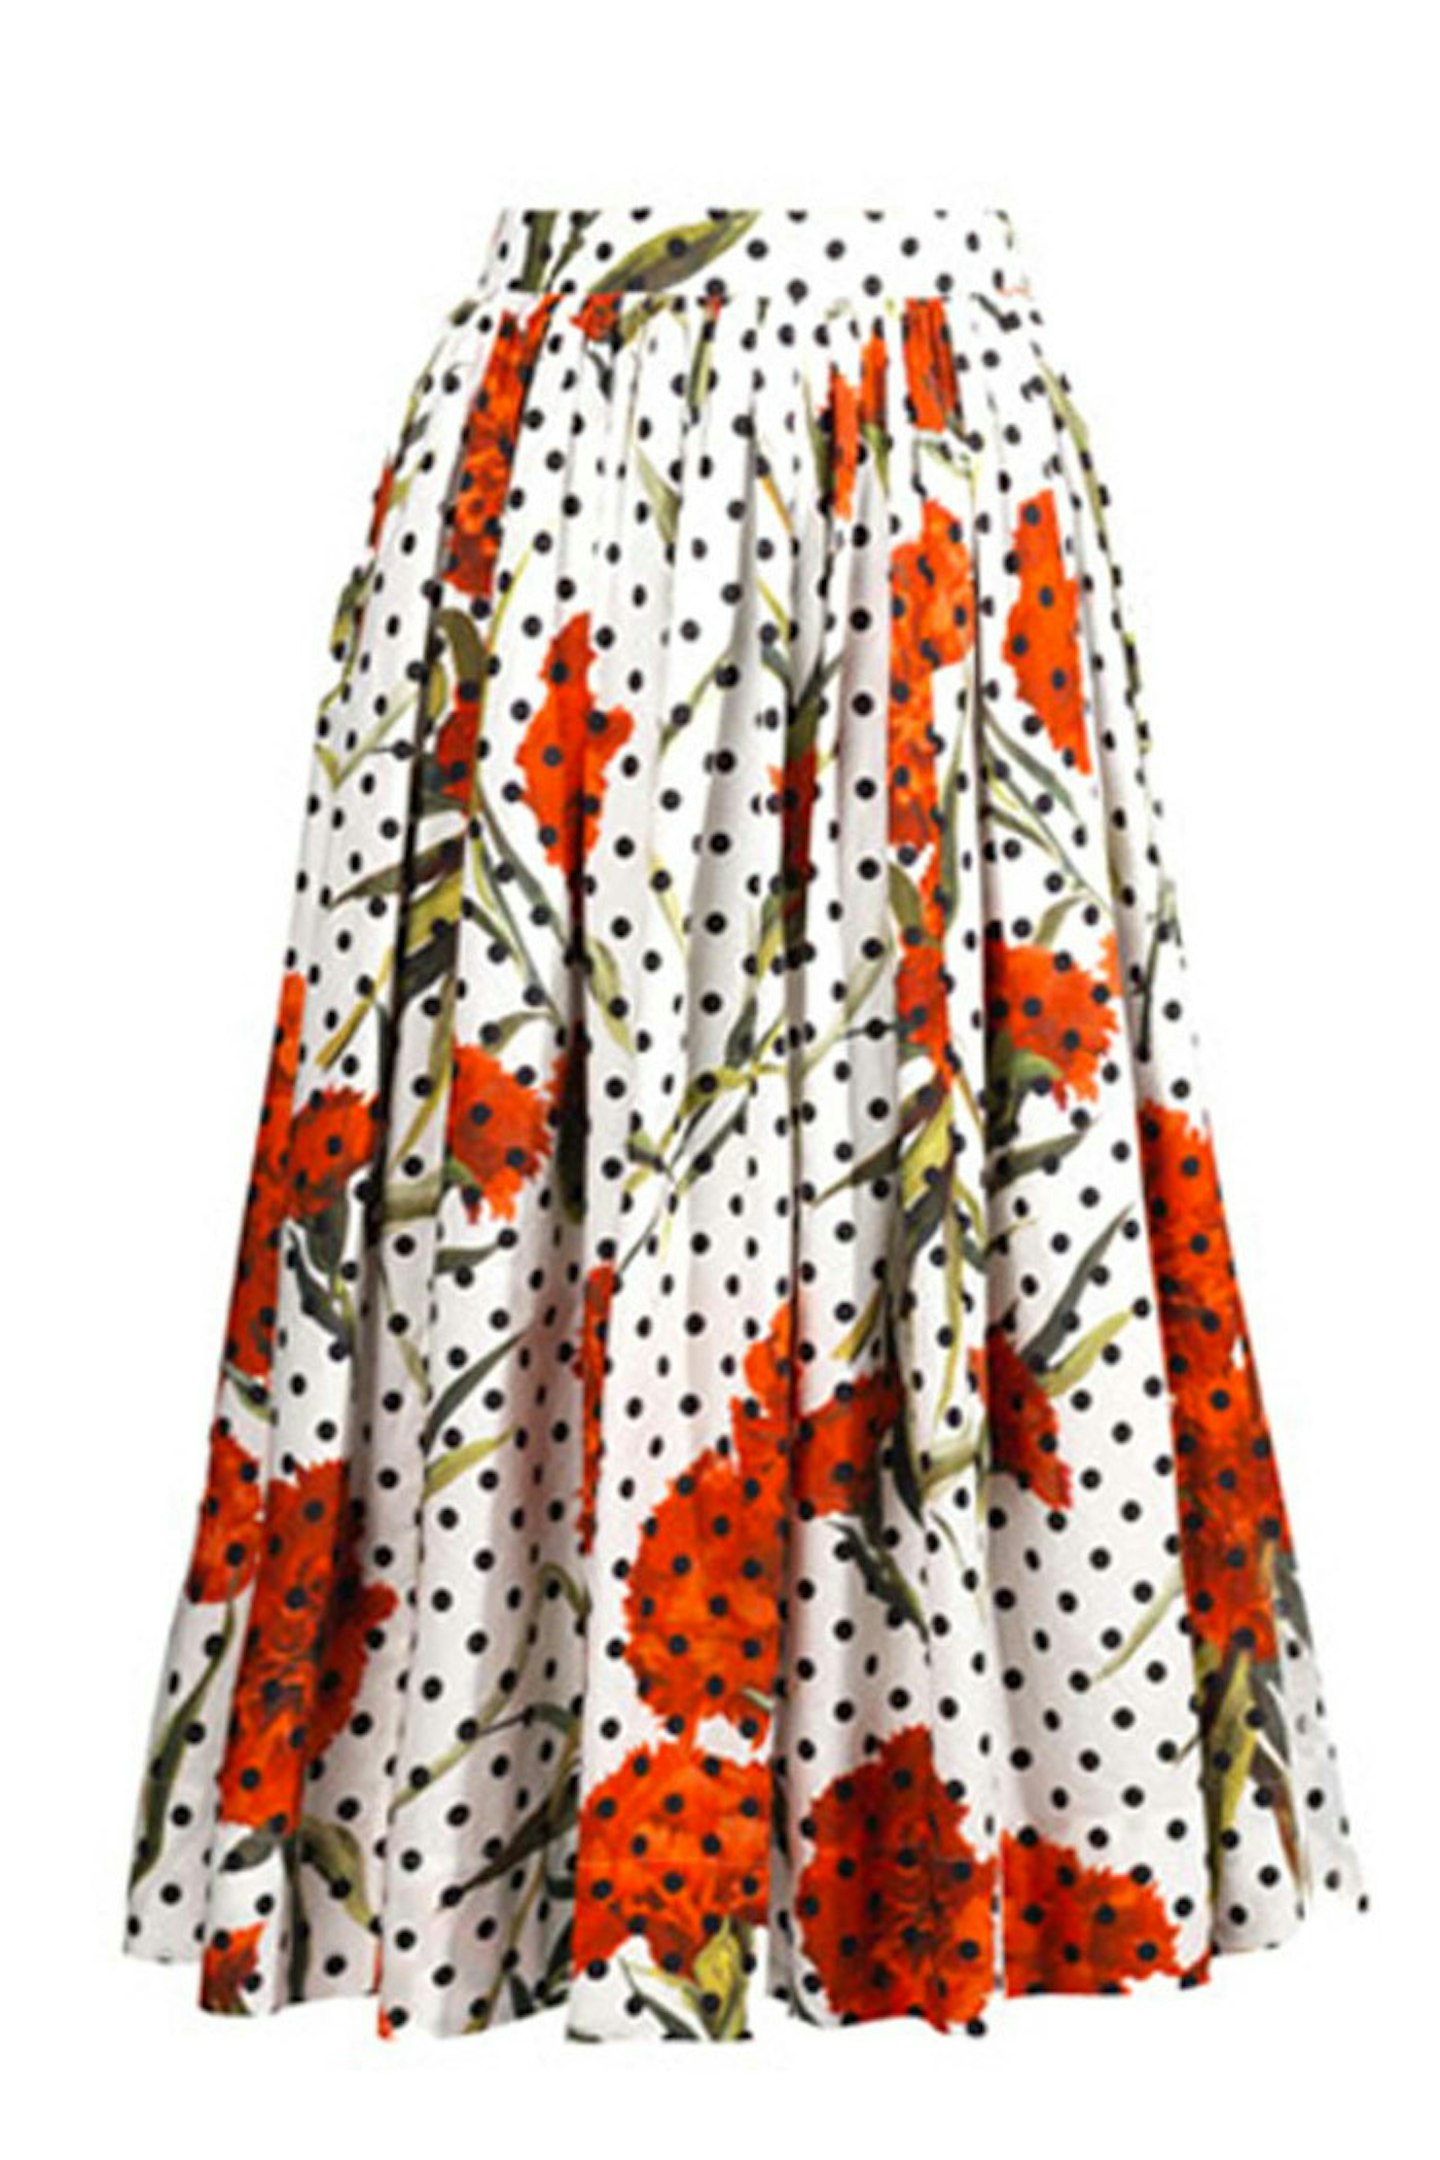 32. Floral and polka dot print skirt, £525, Dolce & Gabbana at Matches